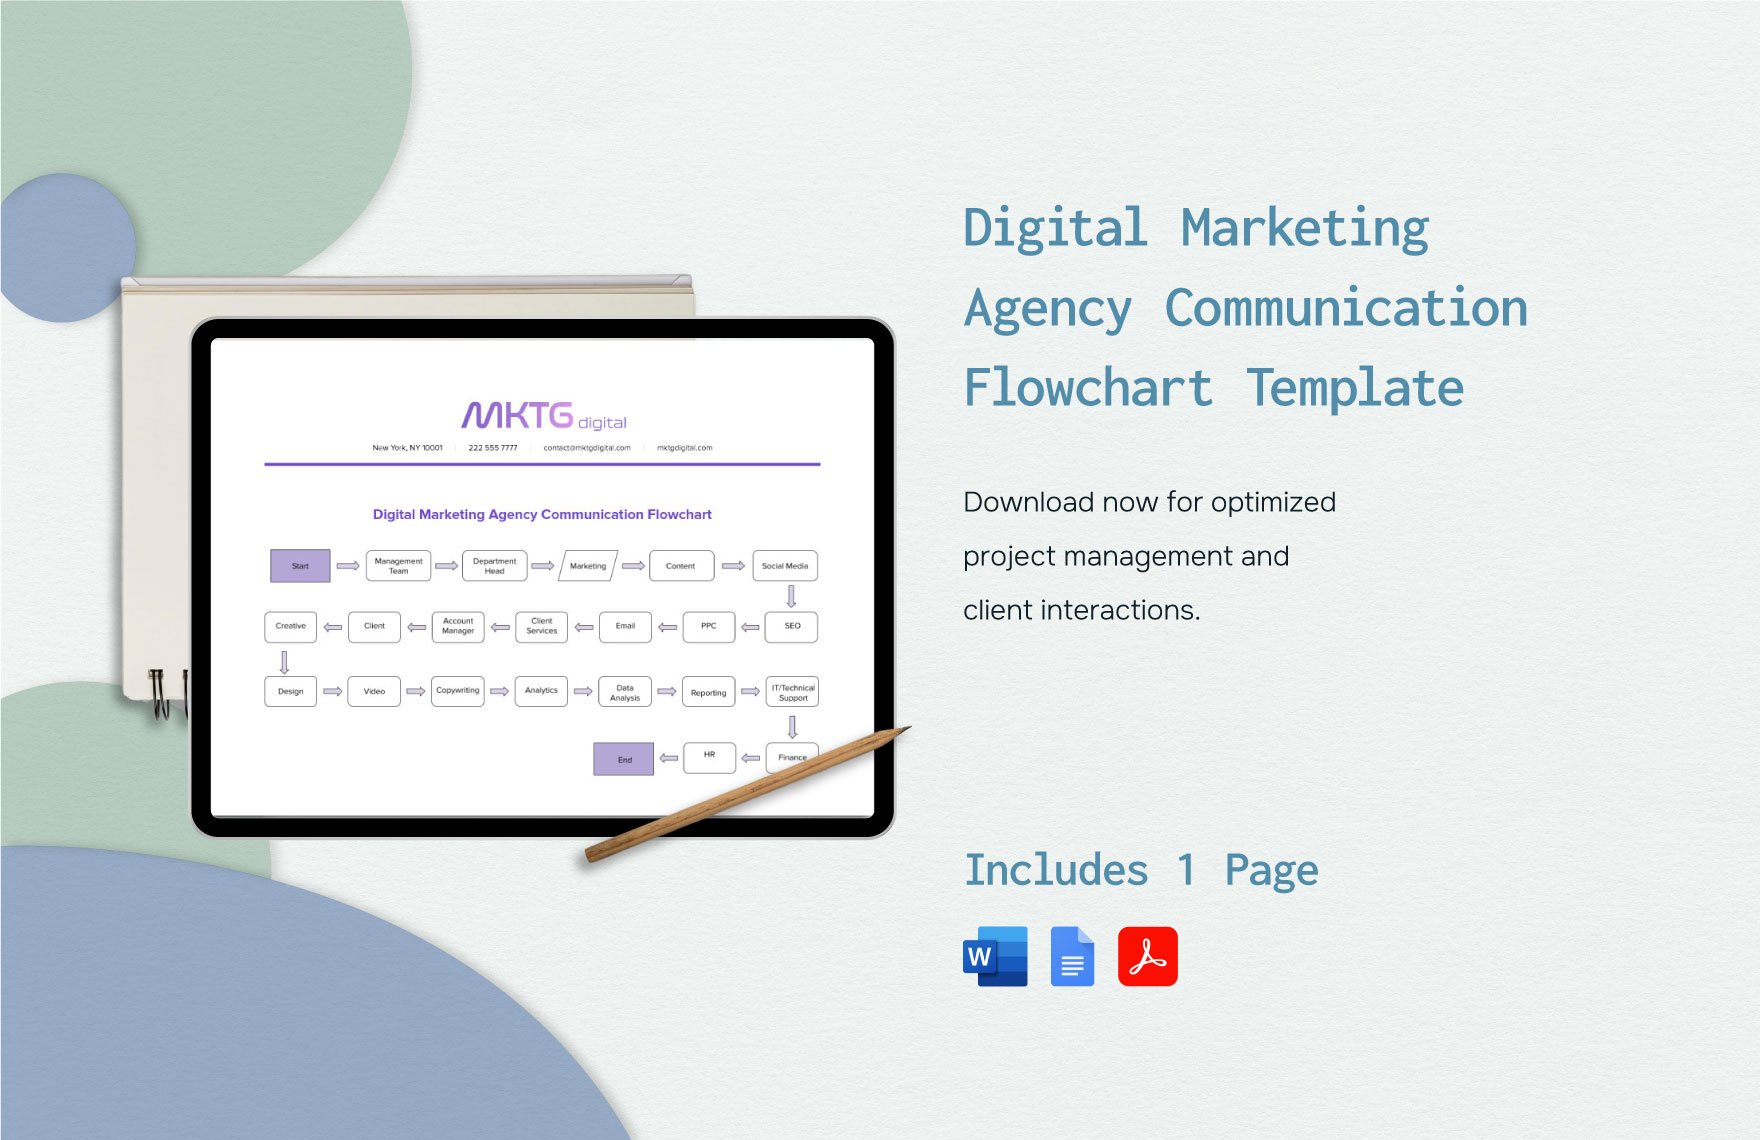 Digital Marketing Agency Communication Flowchart Template